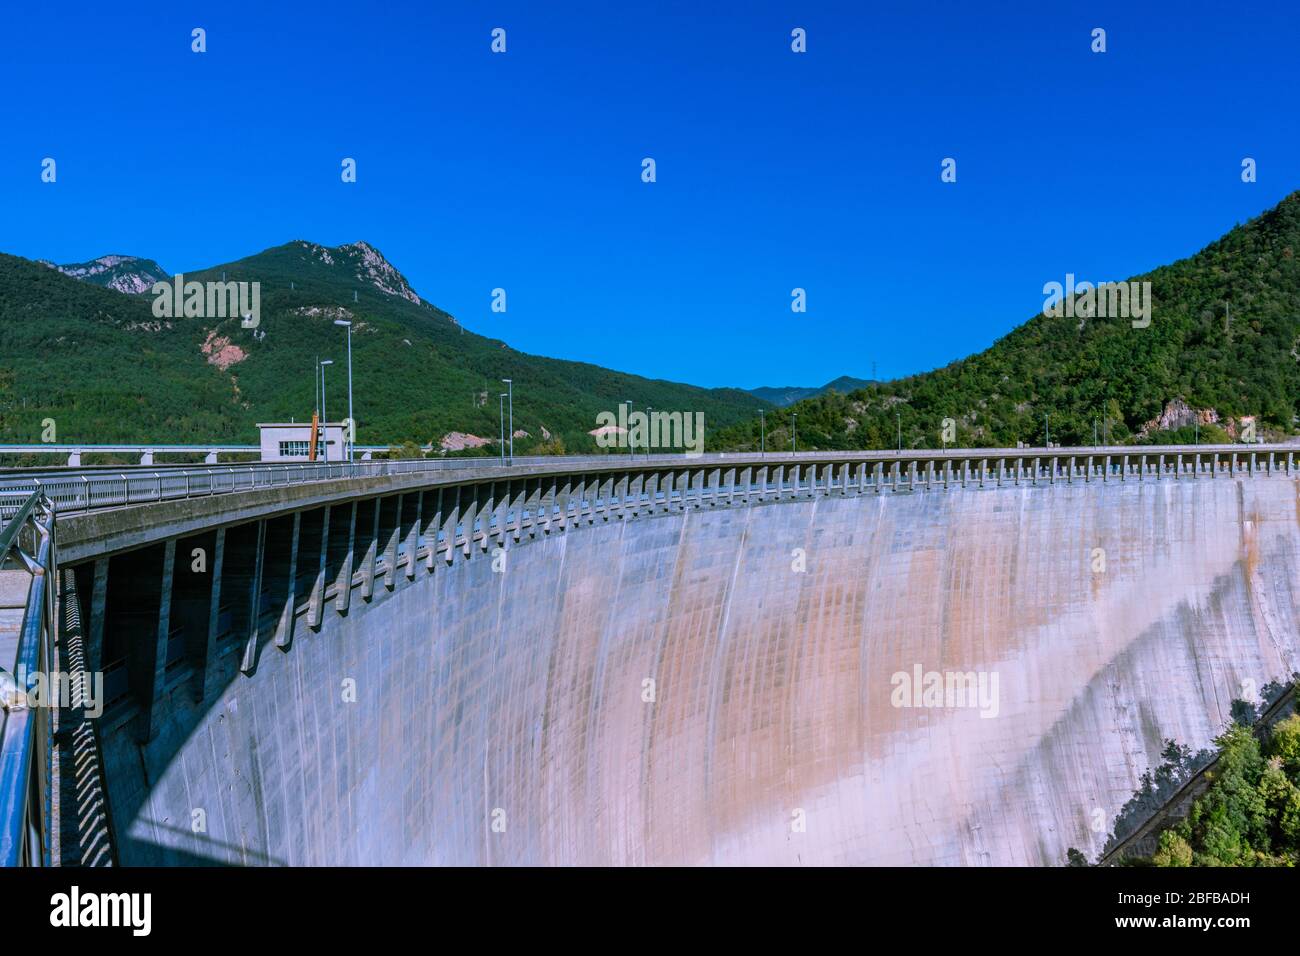 The Baells Dam (Bergueda province, Catalonia, Spain) Stock Photo